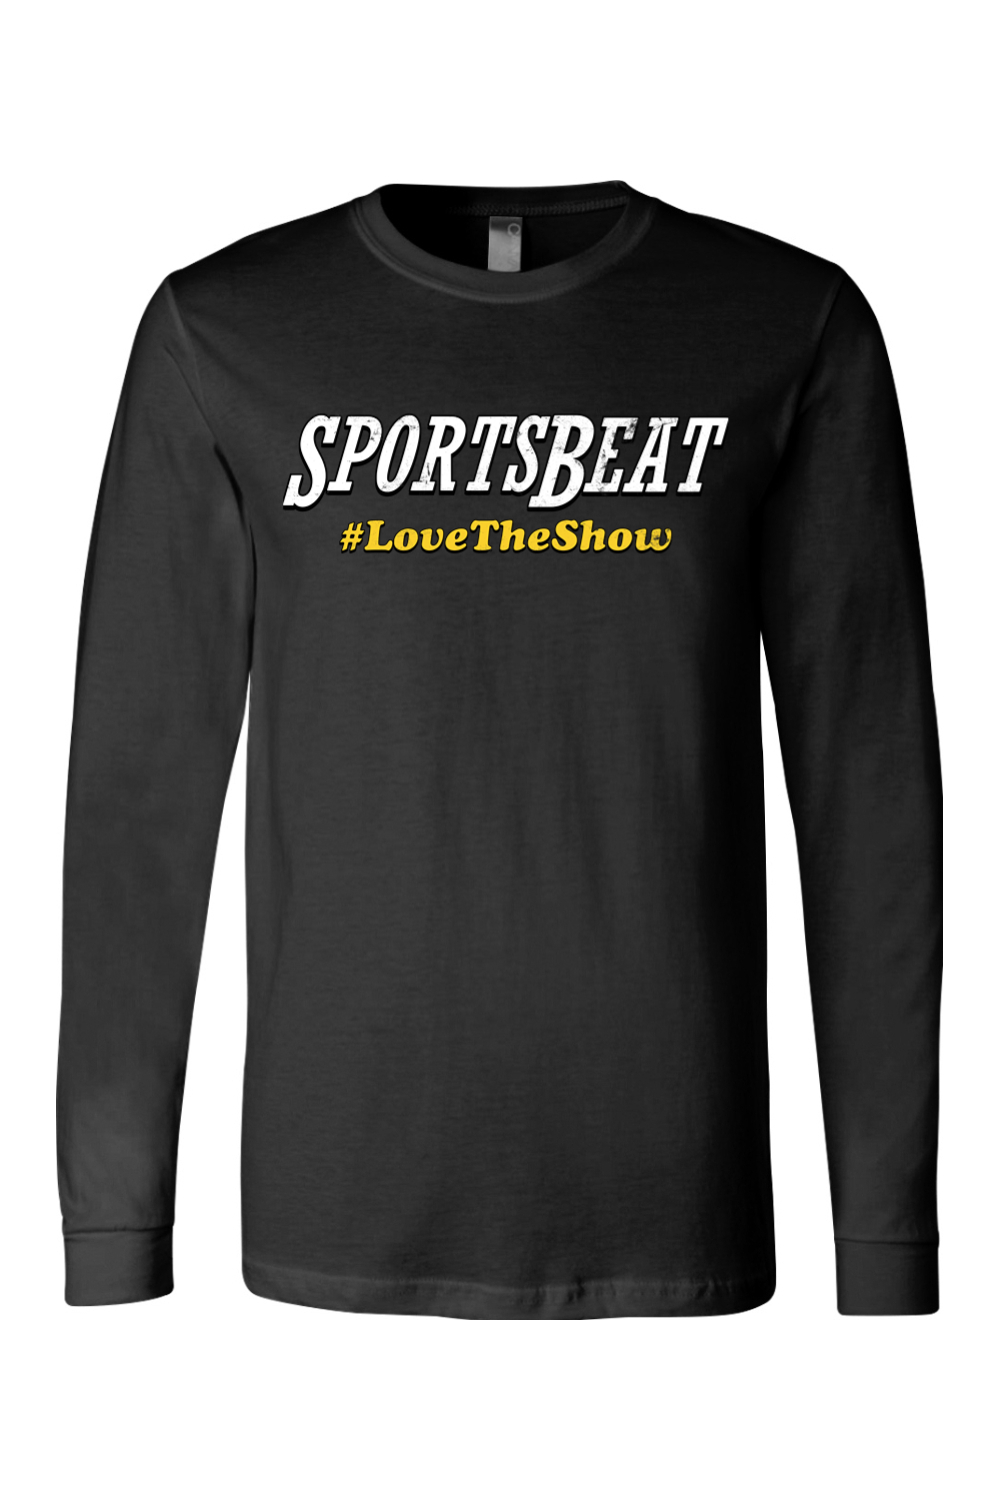 SportsBeat - #LoveTheShow - Long Sleeve Tee - Yinzylvania